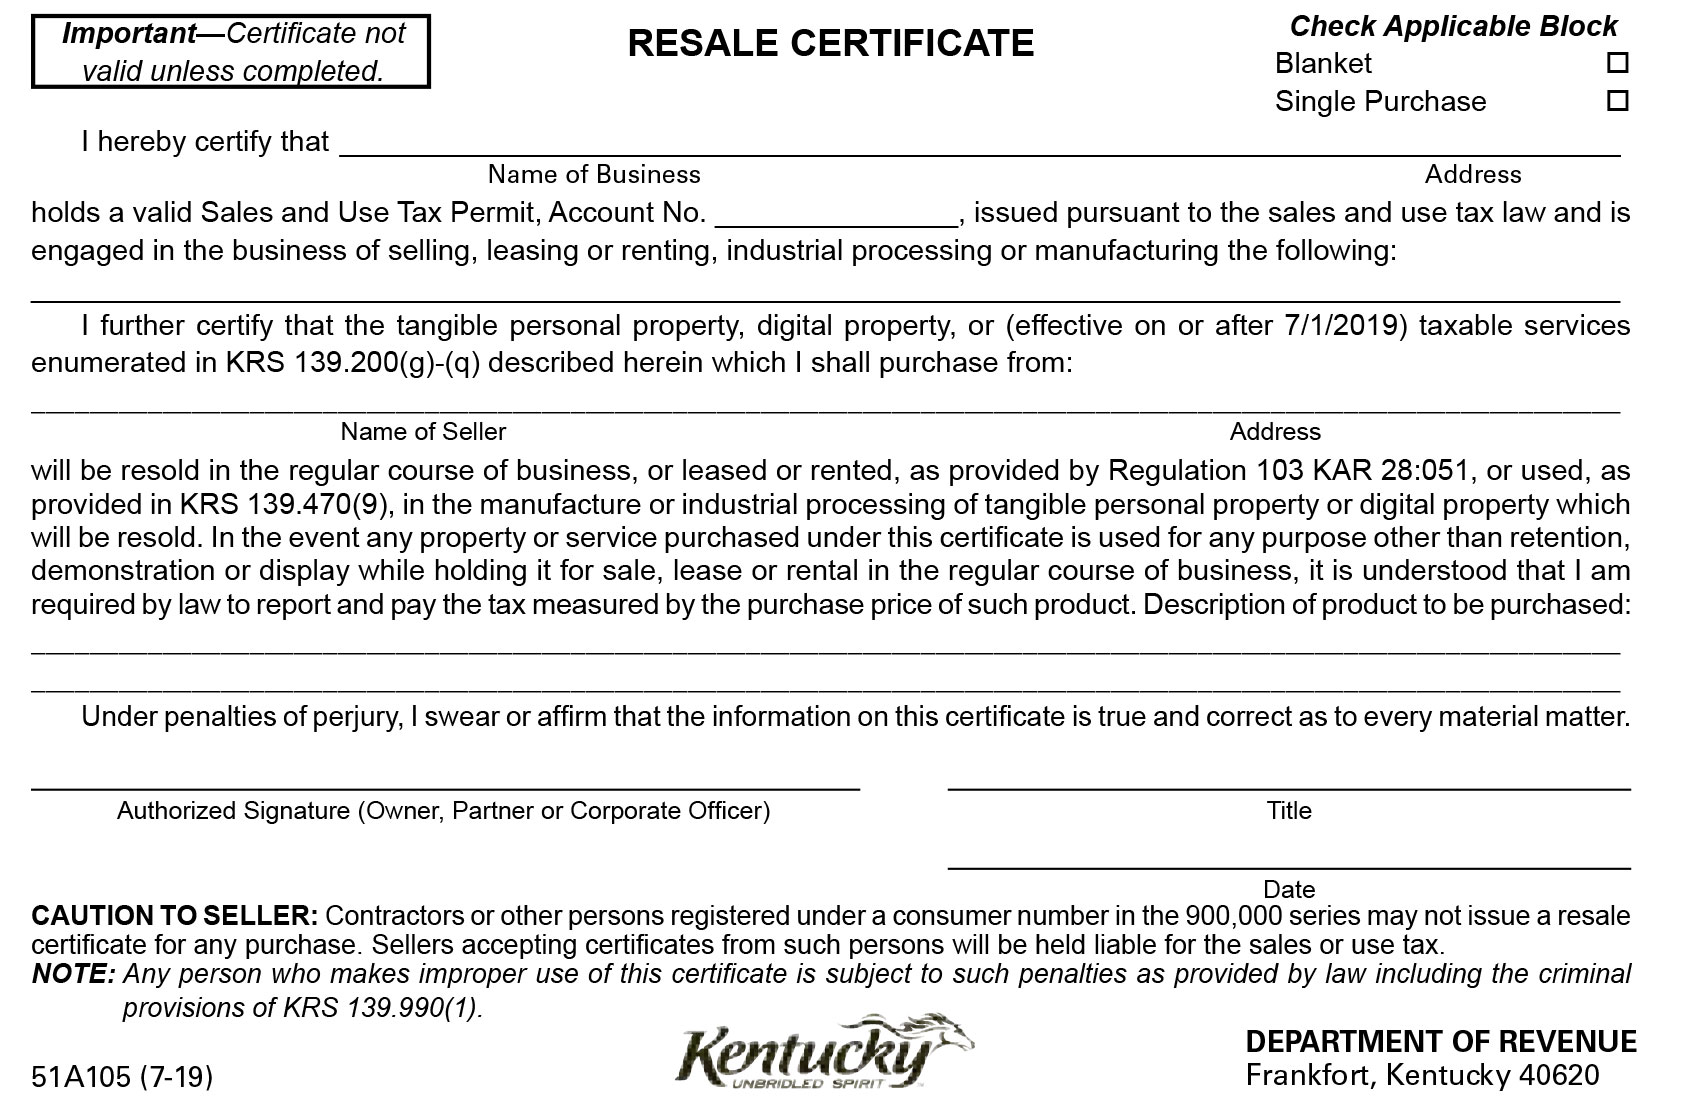 Kentucky resale certificate